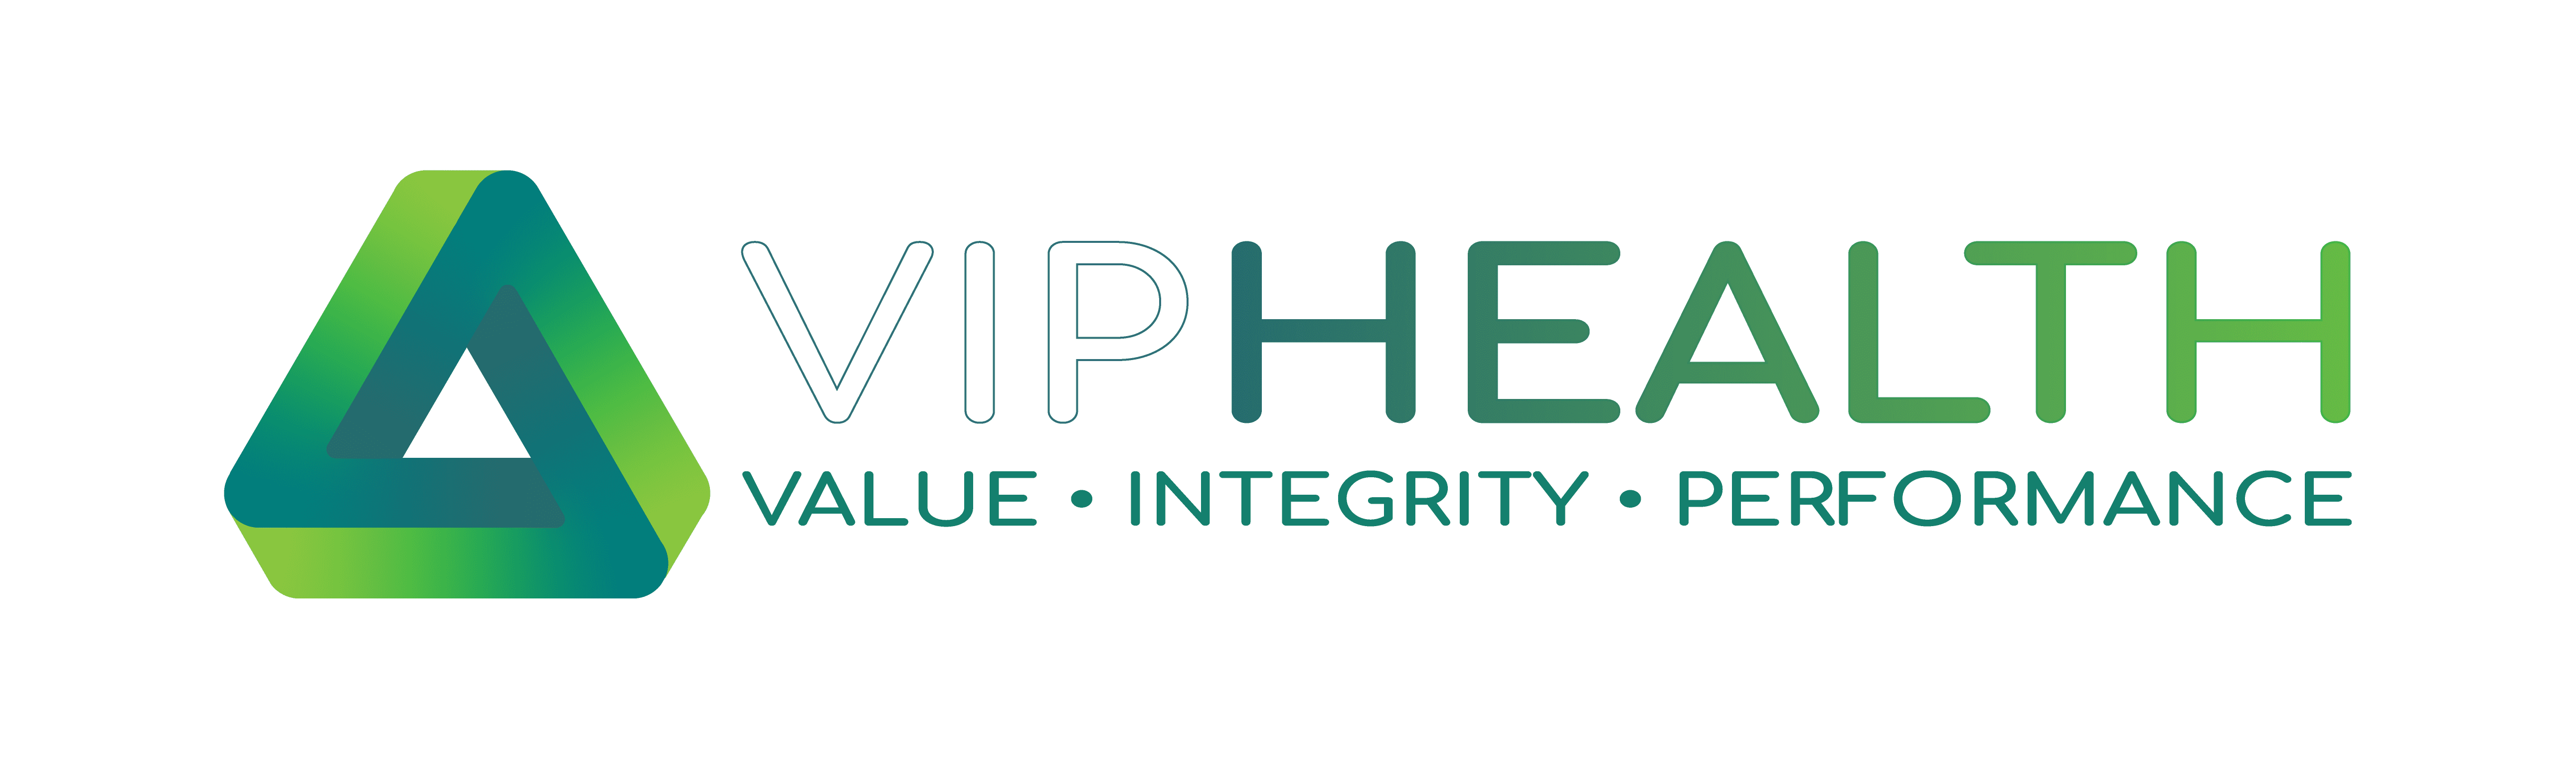 VIP Health Website Title 2 